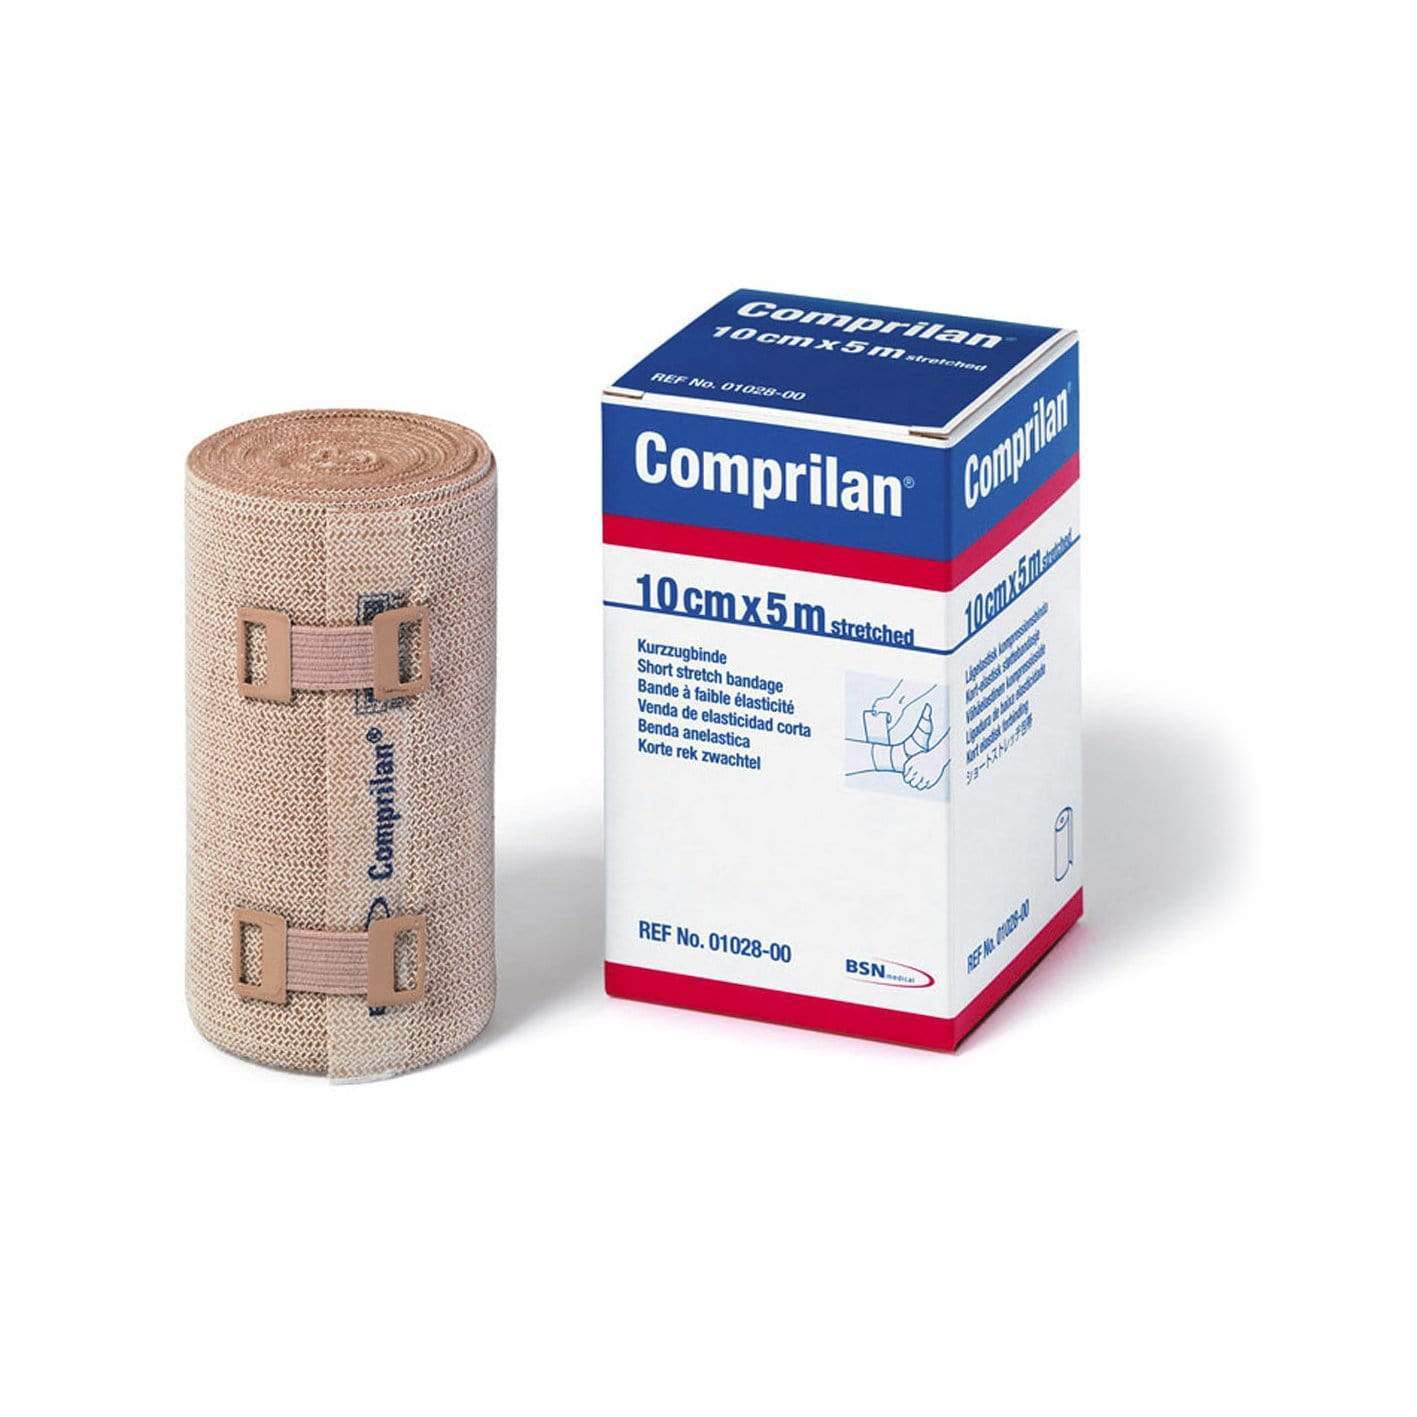 BSN Medical Comprilan Compression Bandages